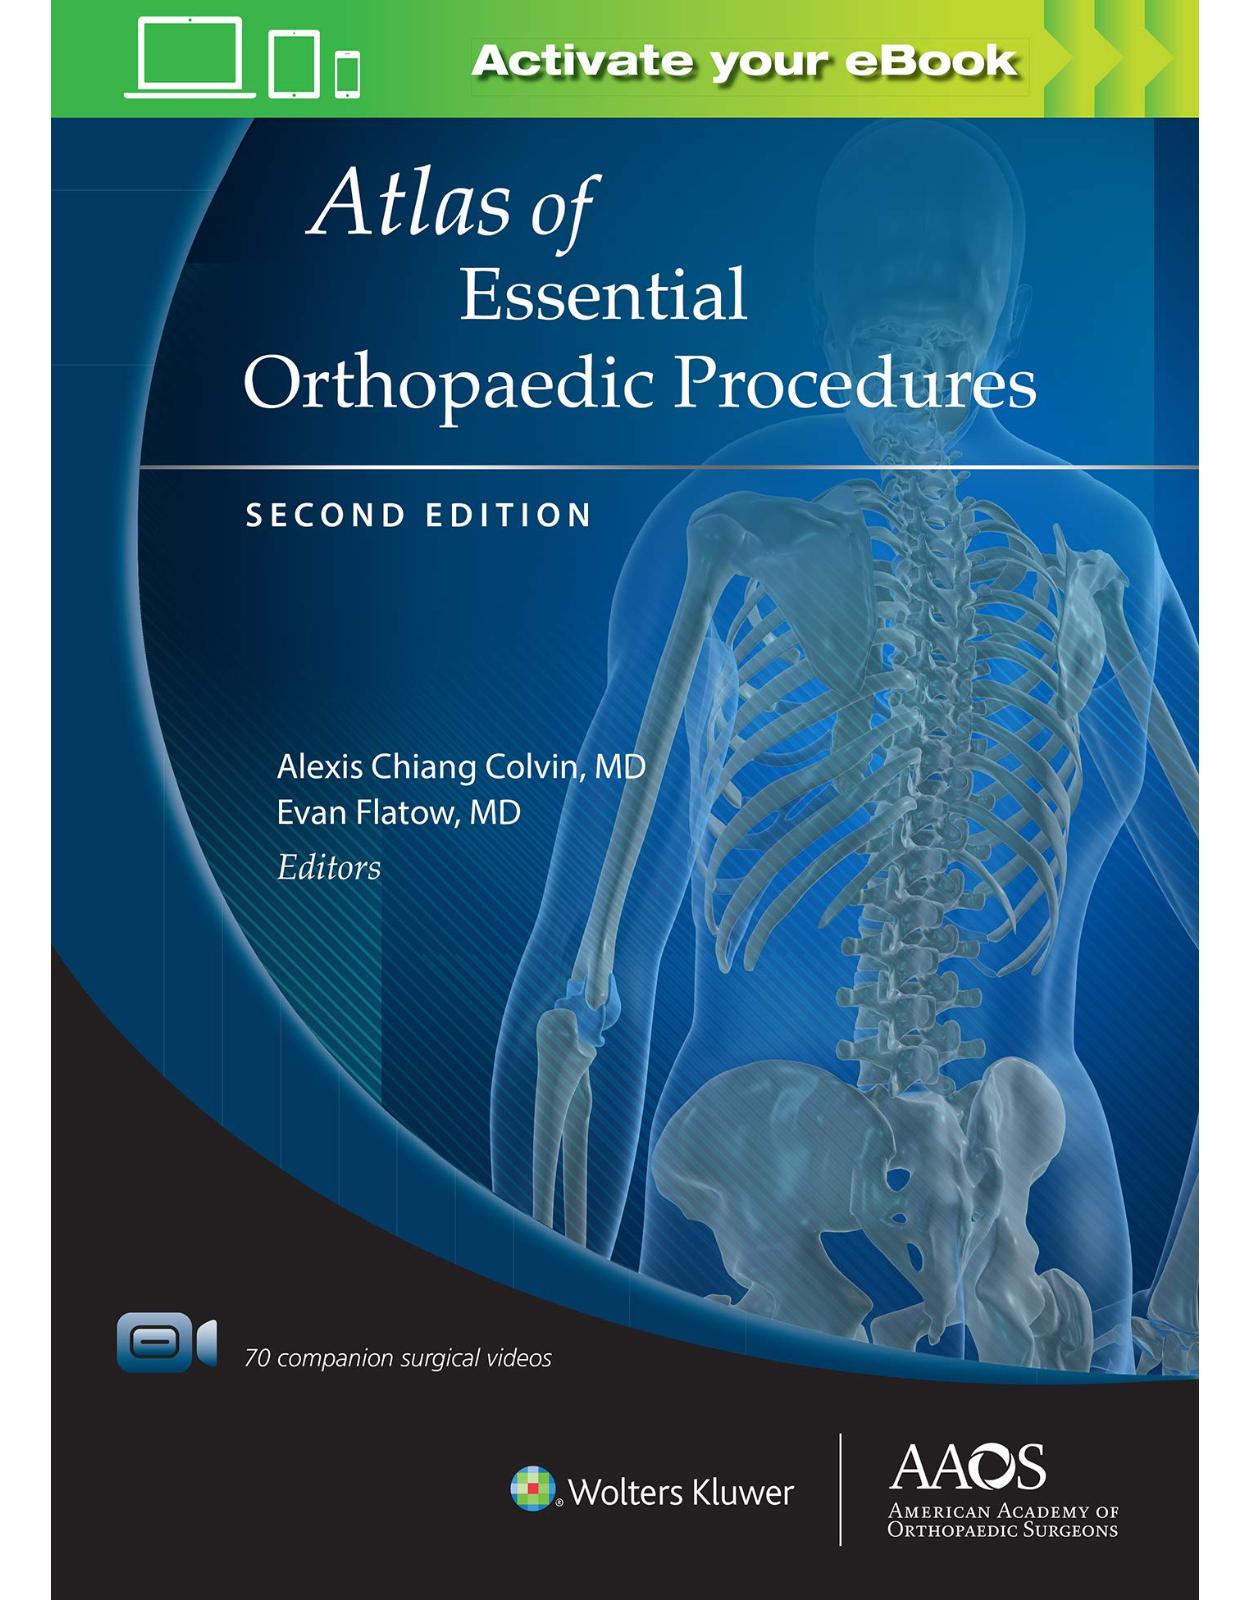 Atlas of Essential Orthopaedic Procedures, Second Edition